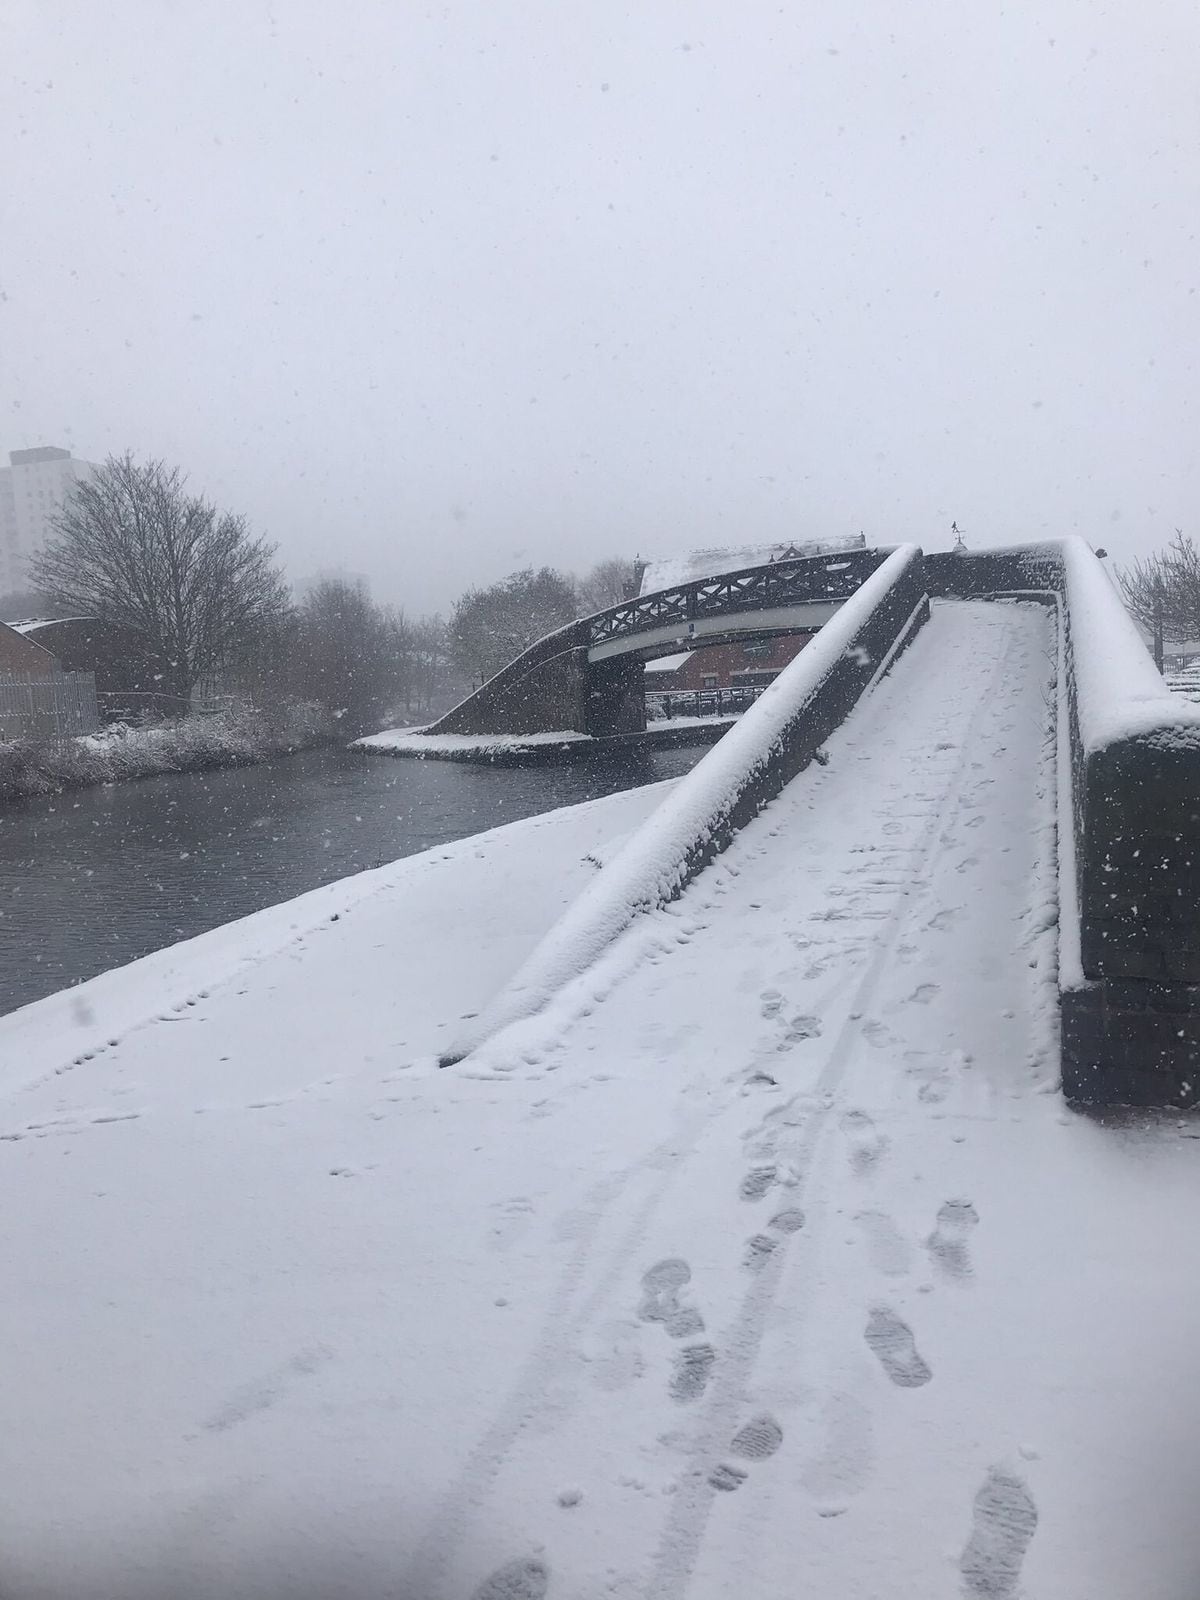 Snow has fallen over the West Midlands region